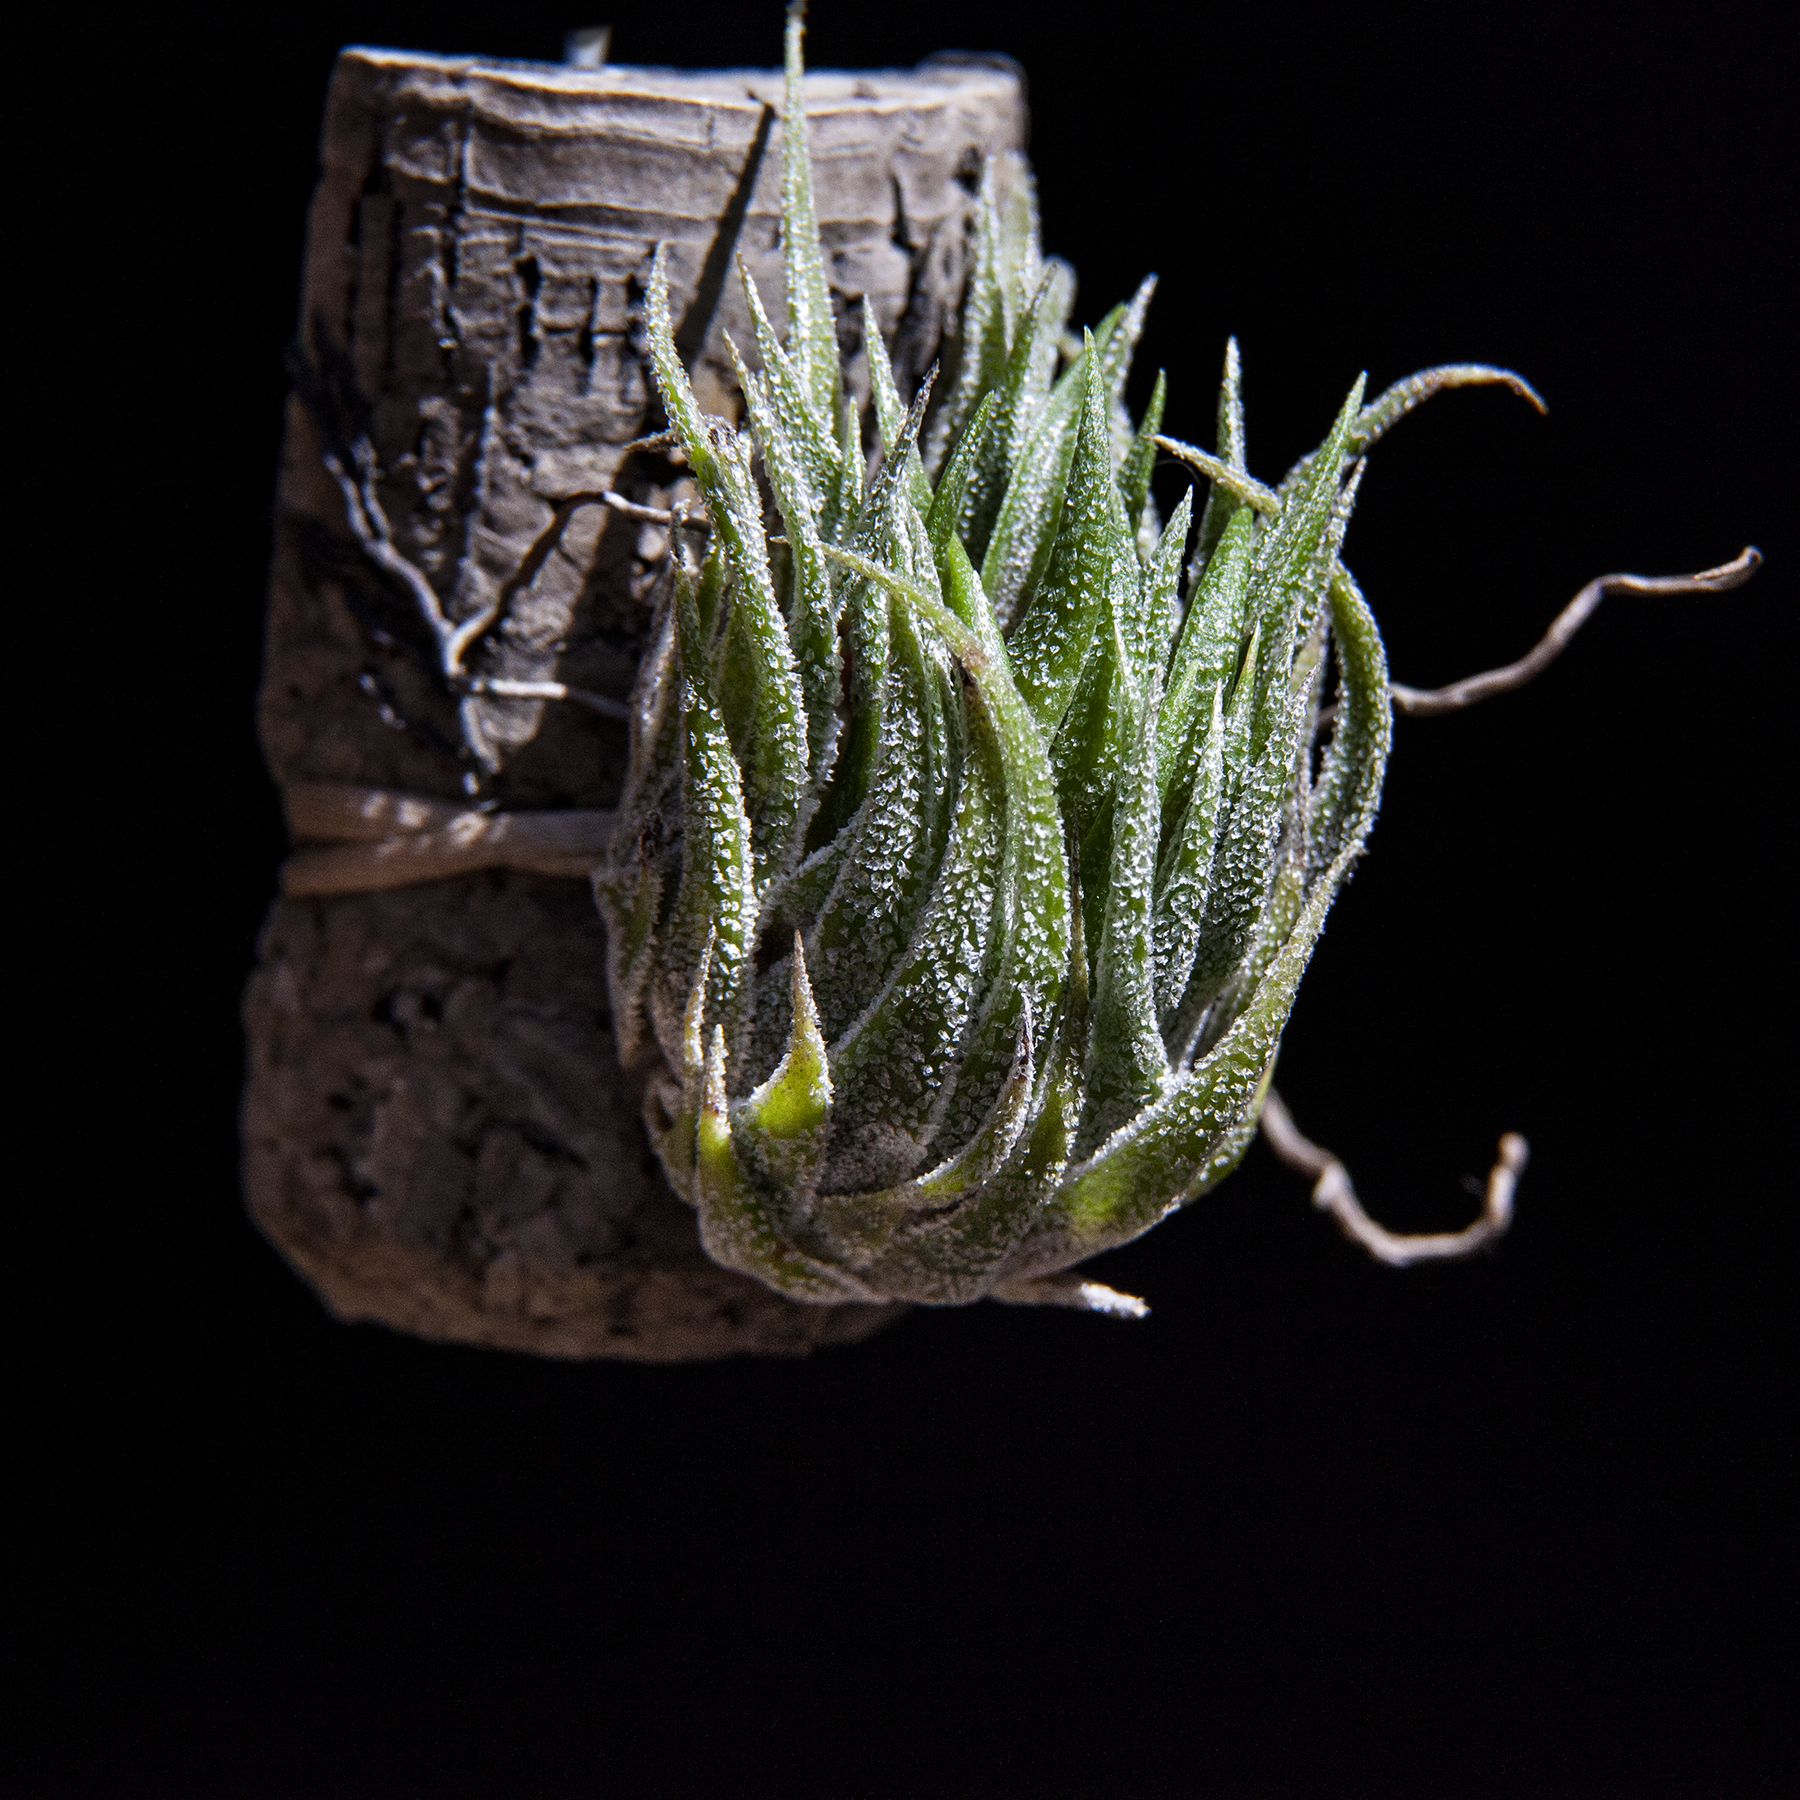 Tillandsia sprengeliana, catalogue of Bromeliad plants